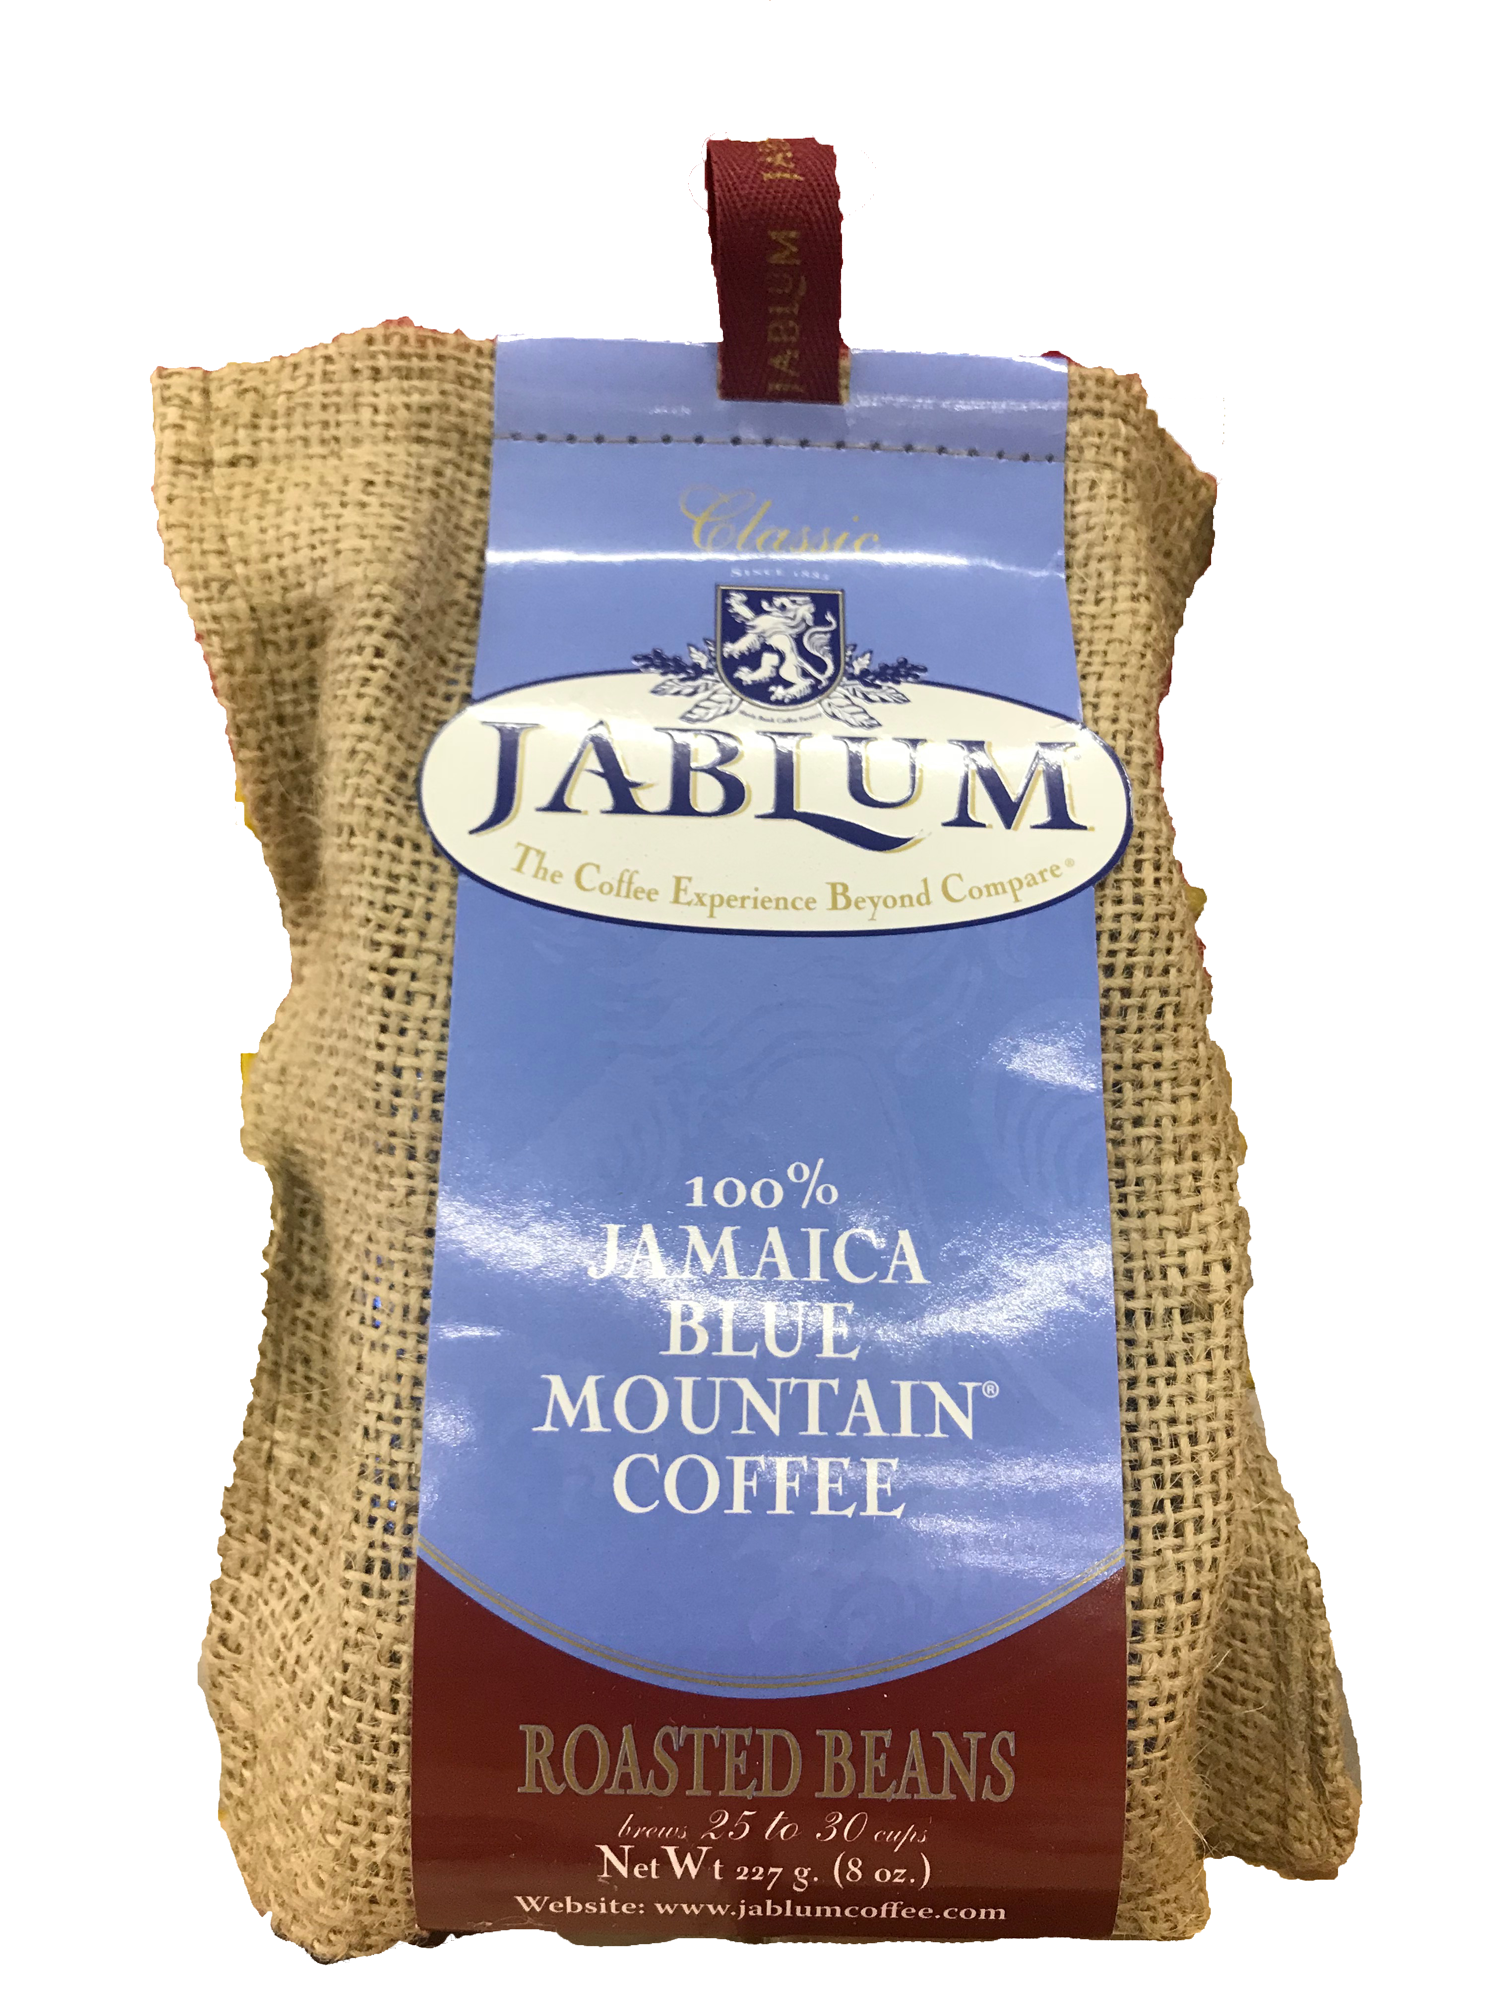 Jablum 100 Jamaica Blue Mountain Coffee Roasted Beans